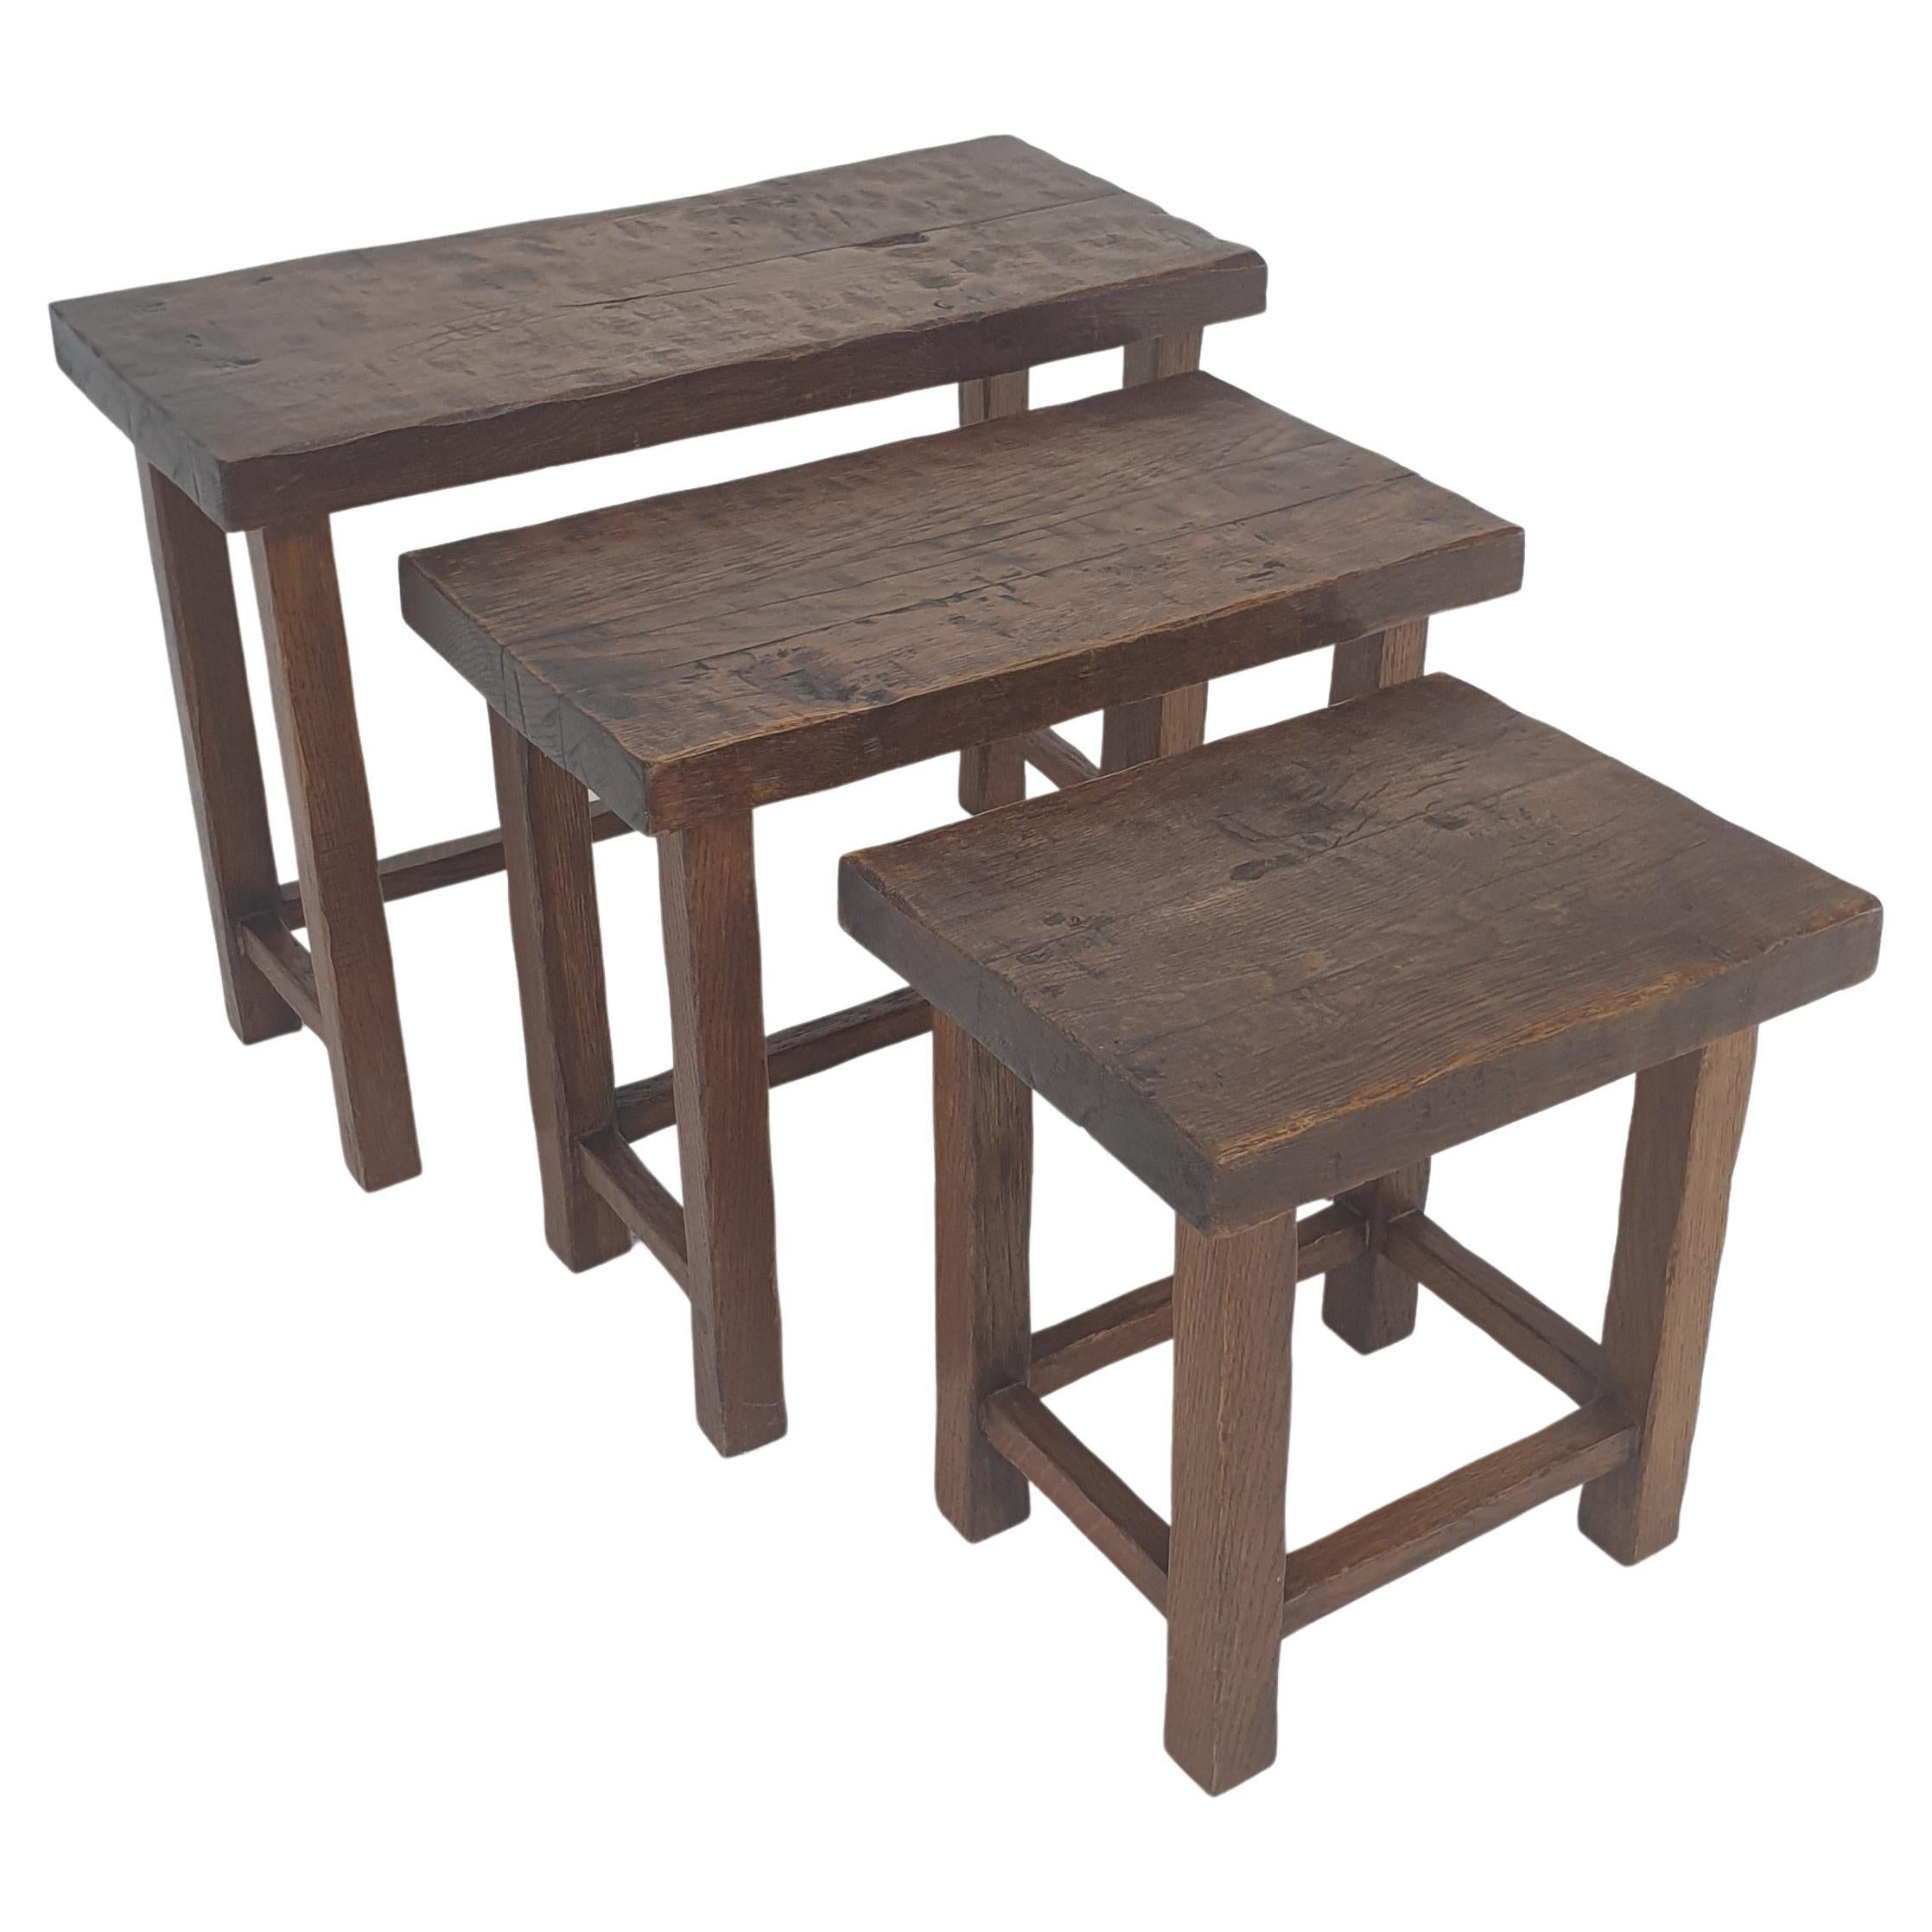 Set of 3 Brutalist Wooden Nesting Tables, Holland 1960s For Sale